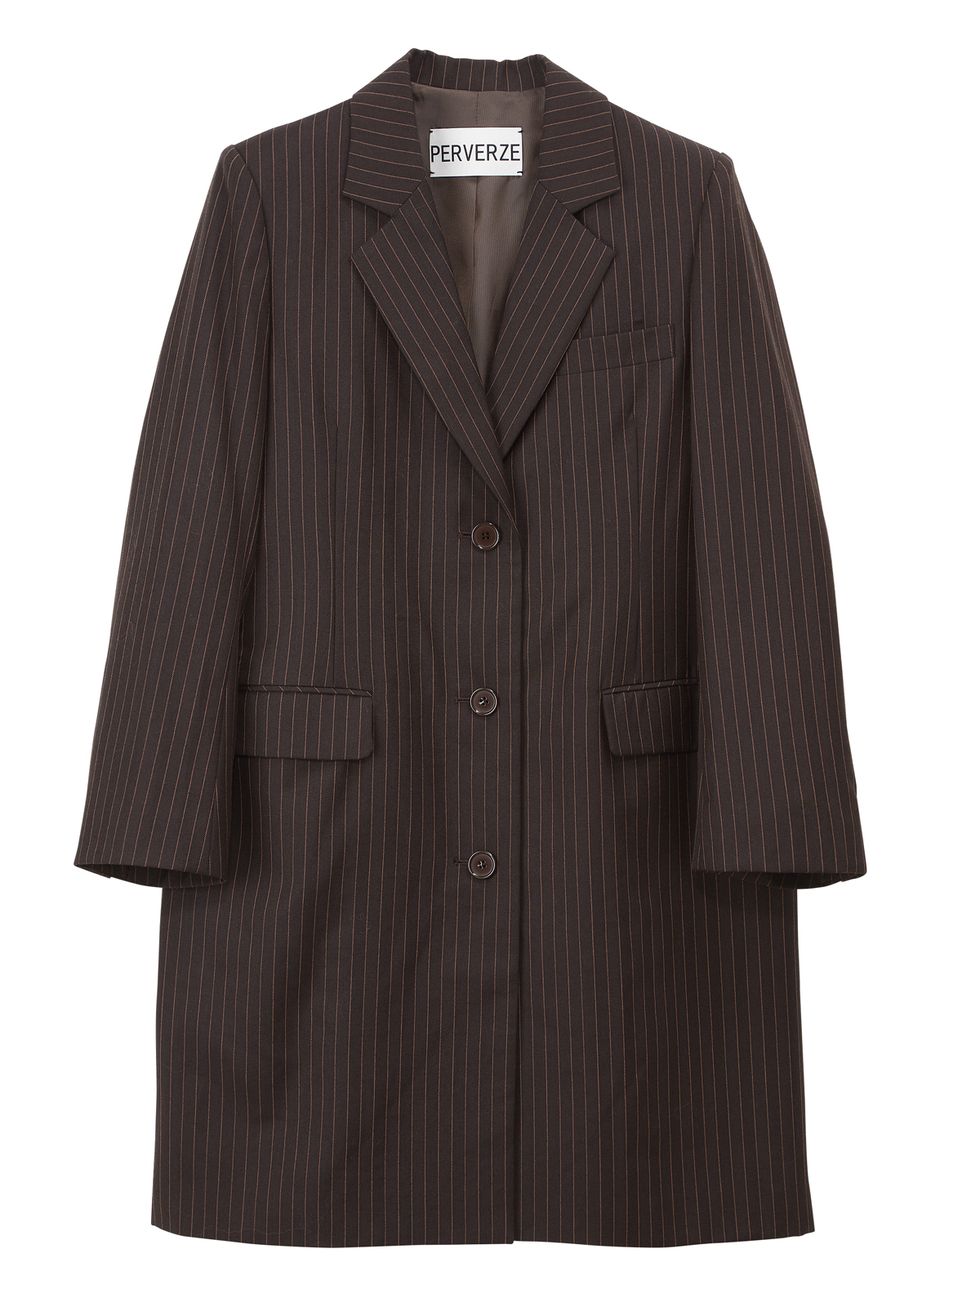 Clothing, Outerwear, Coat, Sleeve, Jacket, Overcoat, Blazer, Suit, Formal wear, Top, 